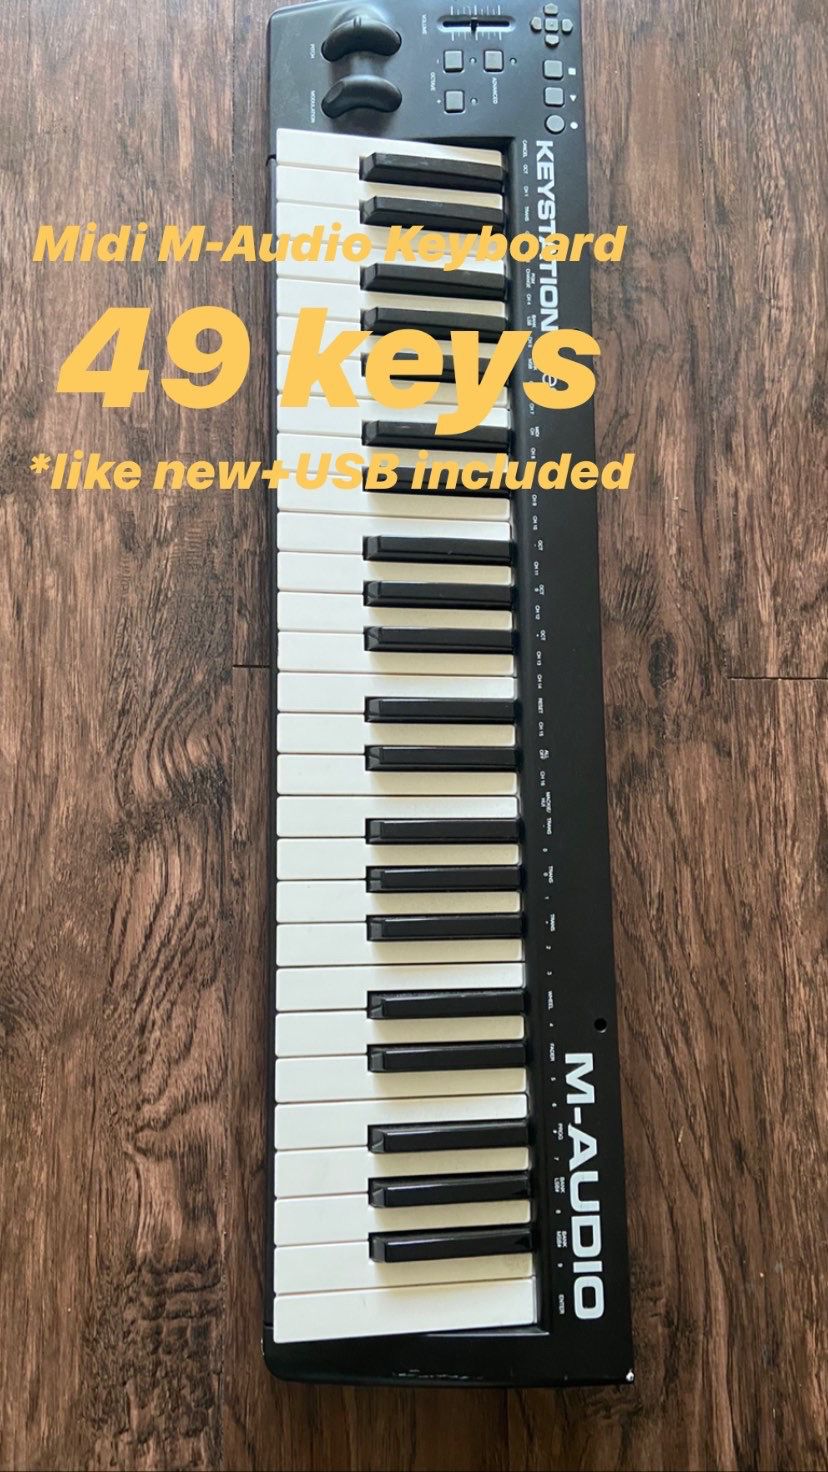 Midi M Audio keyboard, 49 keys